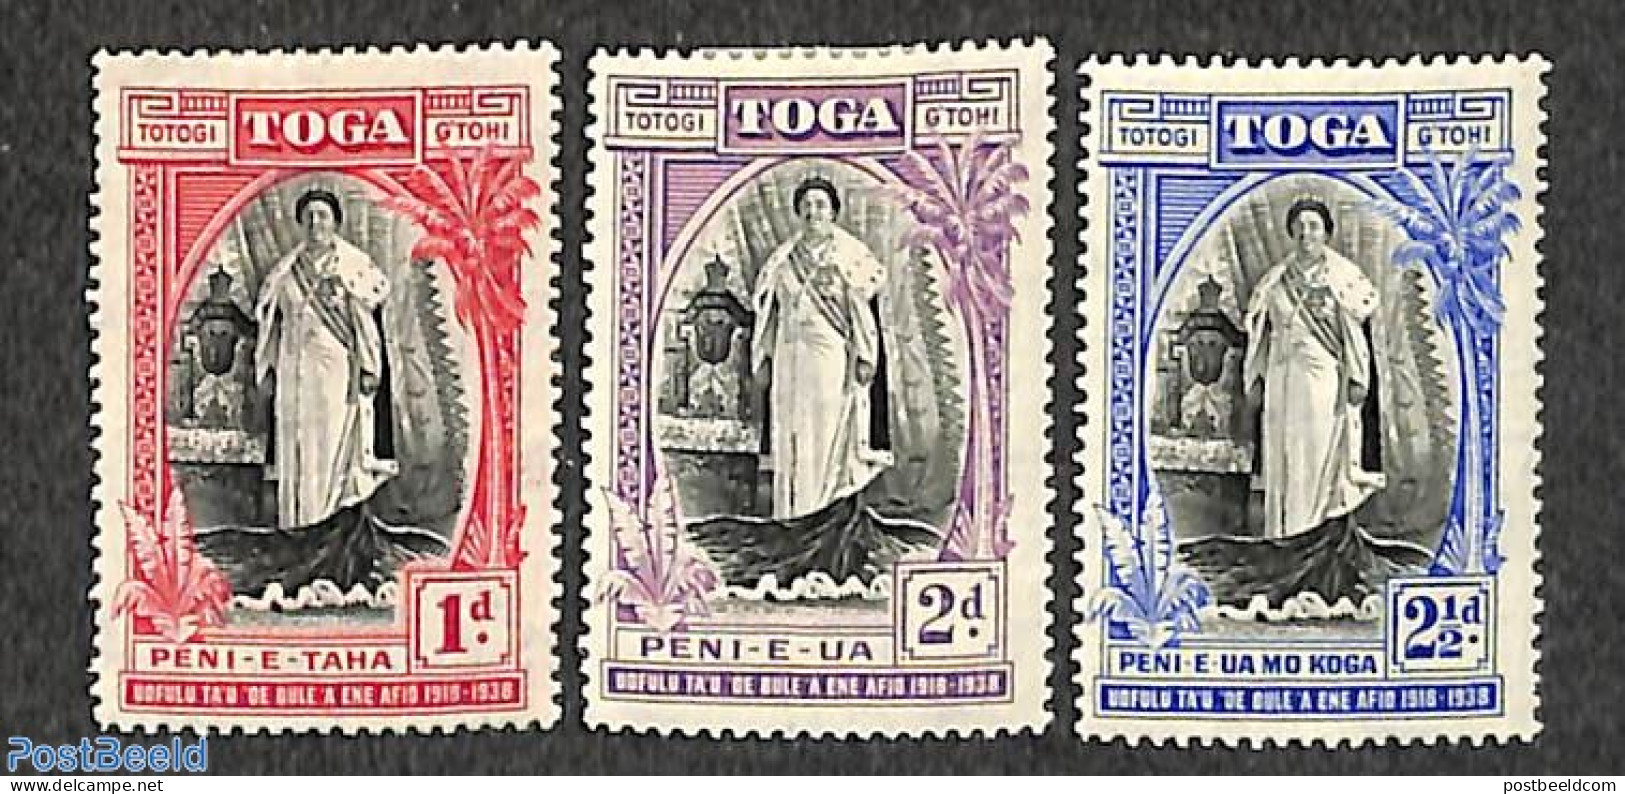 Tonga 1938 Queen Salote 3v, Unused (hinged), History - Kings & Queens (Royalty) - Royalties, Royals